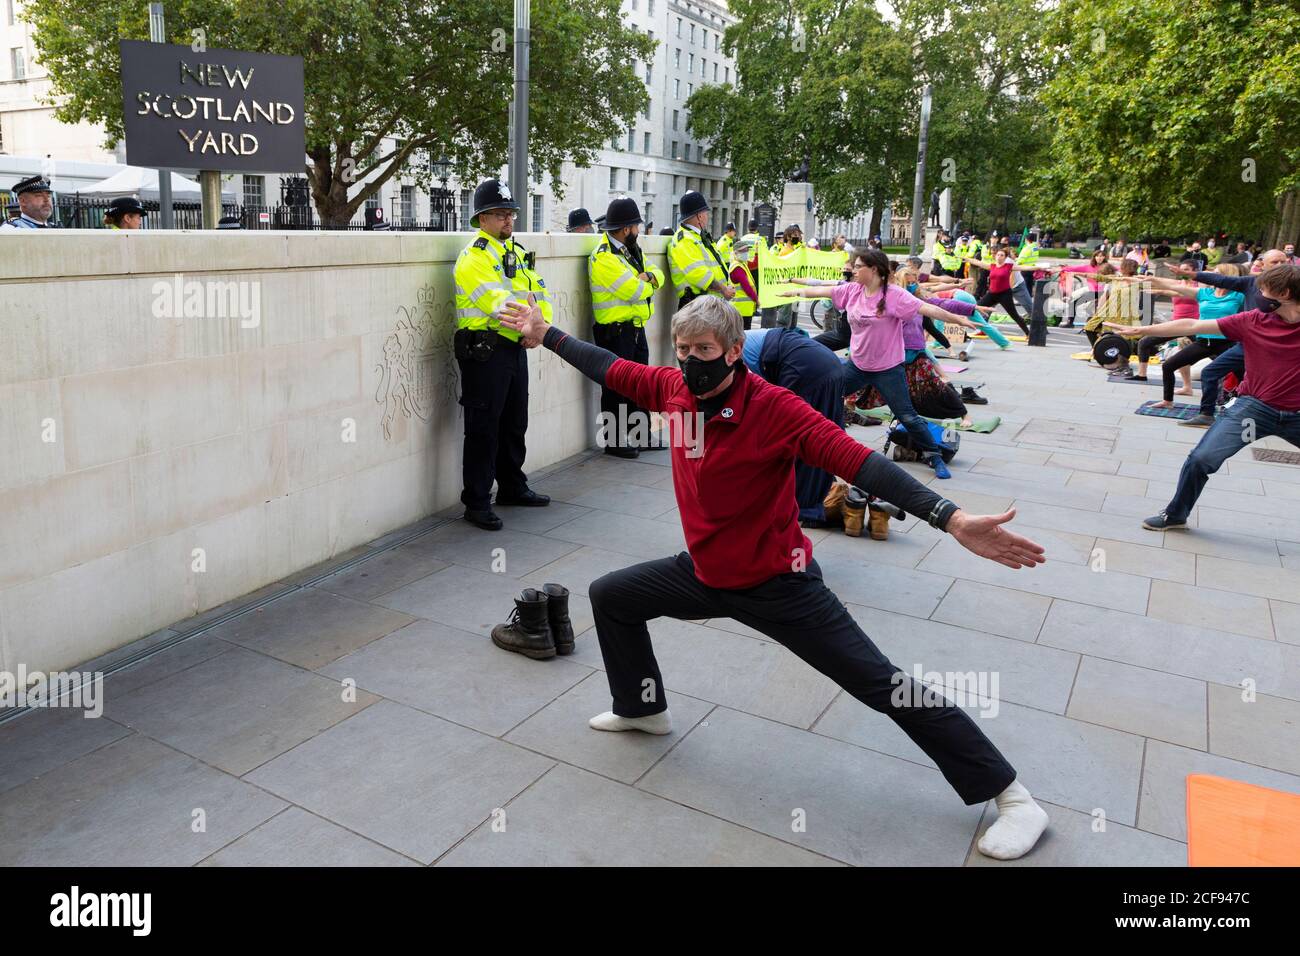 Protesters strike yoga poses outside New Scotland Yard during Extinction Rebellion demonstration, Westminster, London, 1 September 2020 Stock Photo